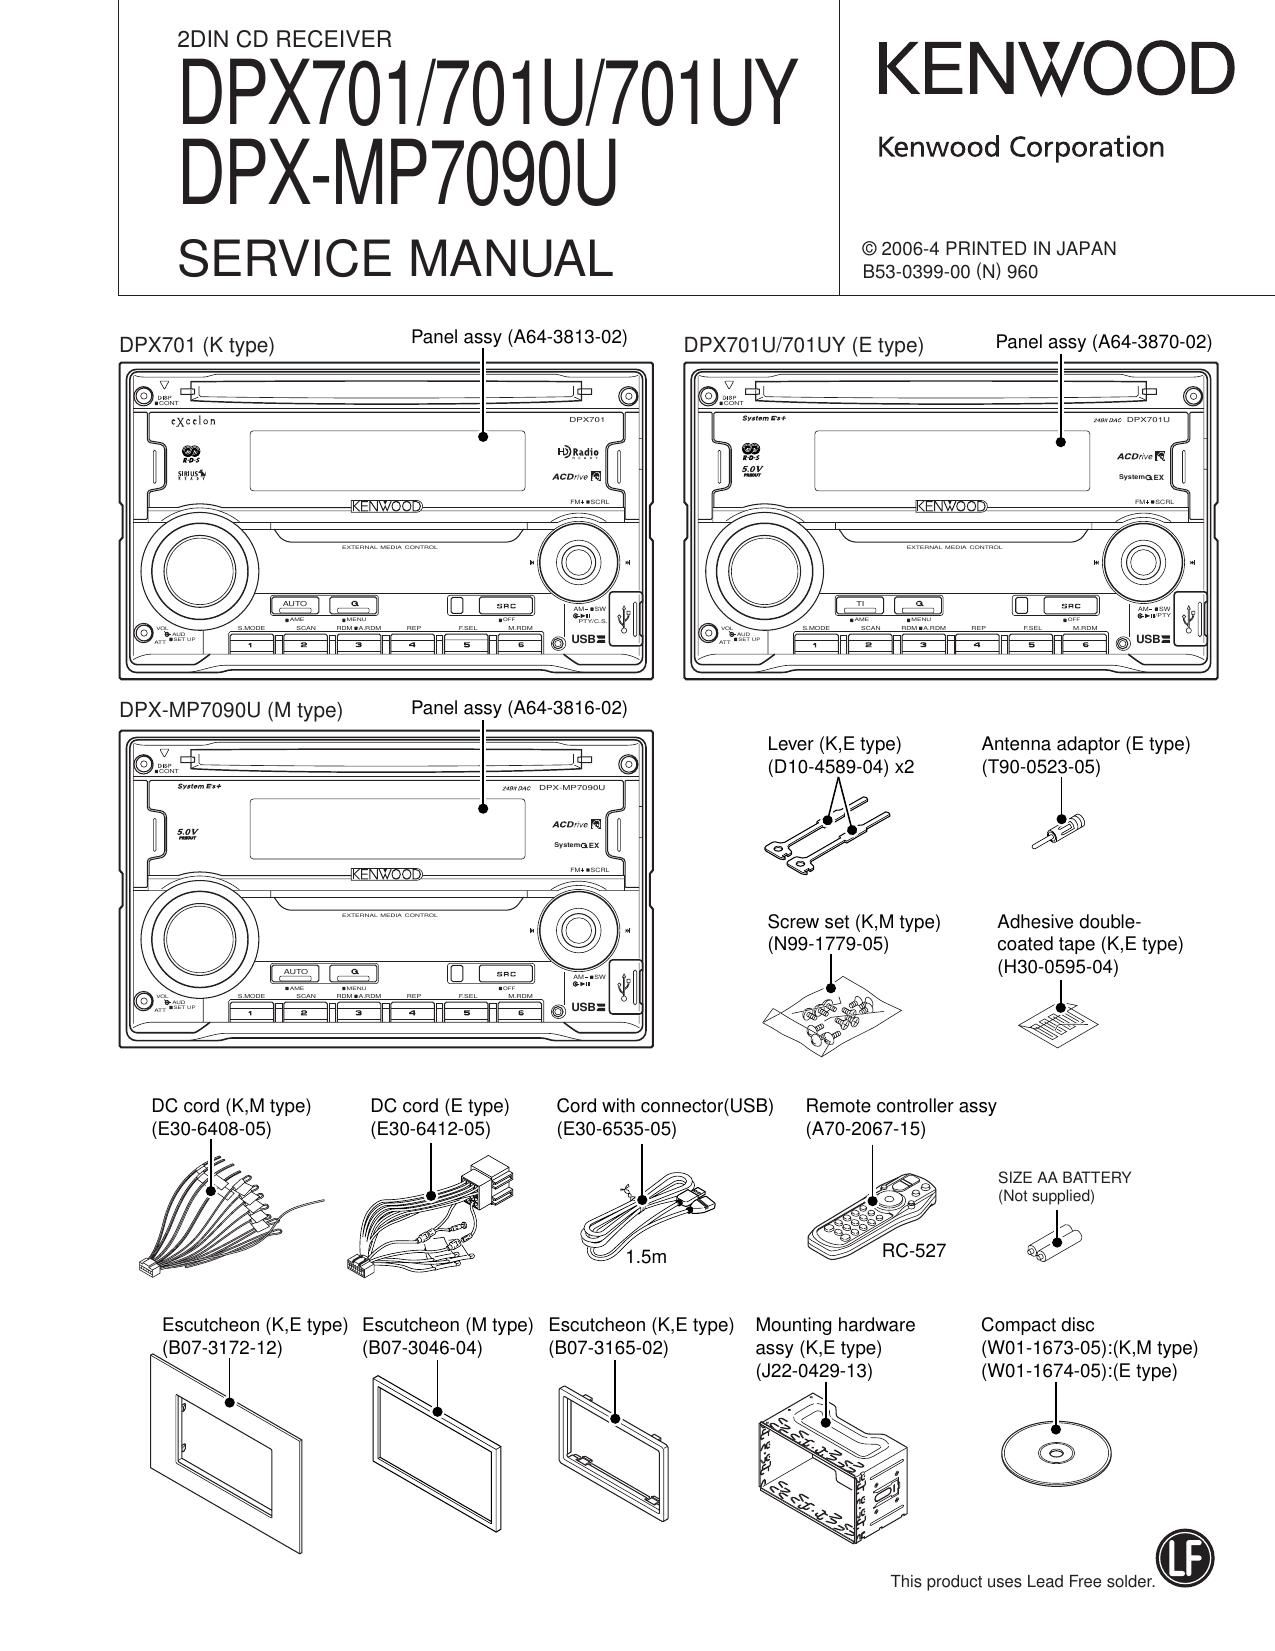 Kenwood DPX 701 Service Manual